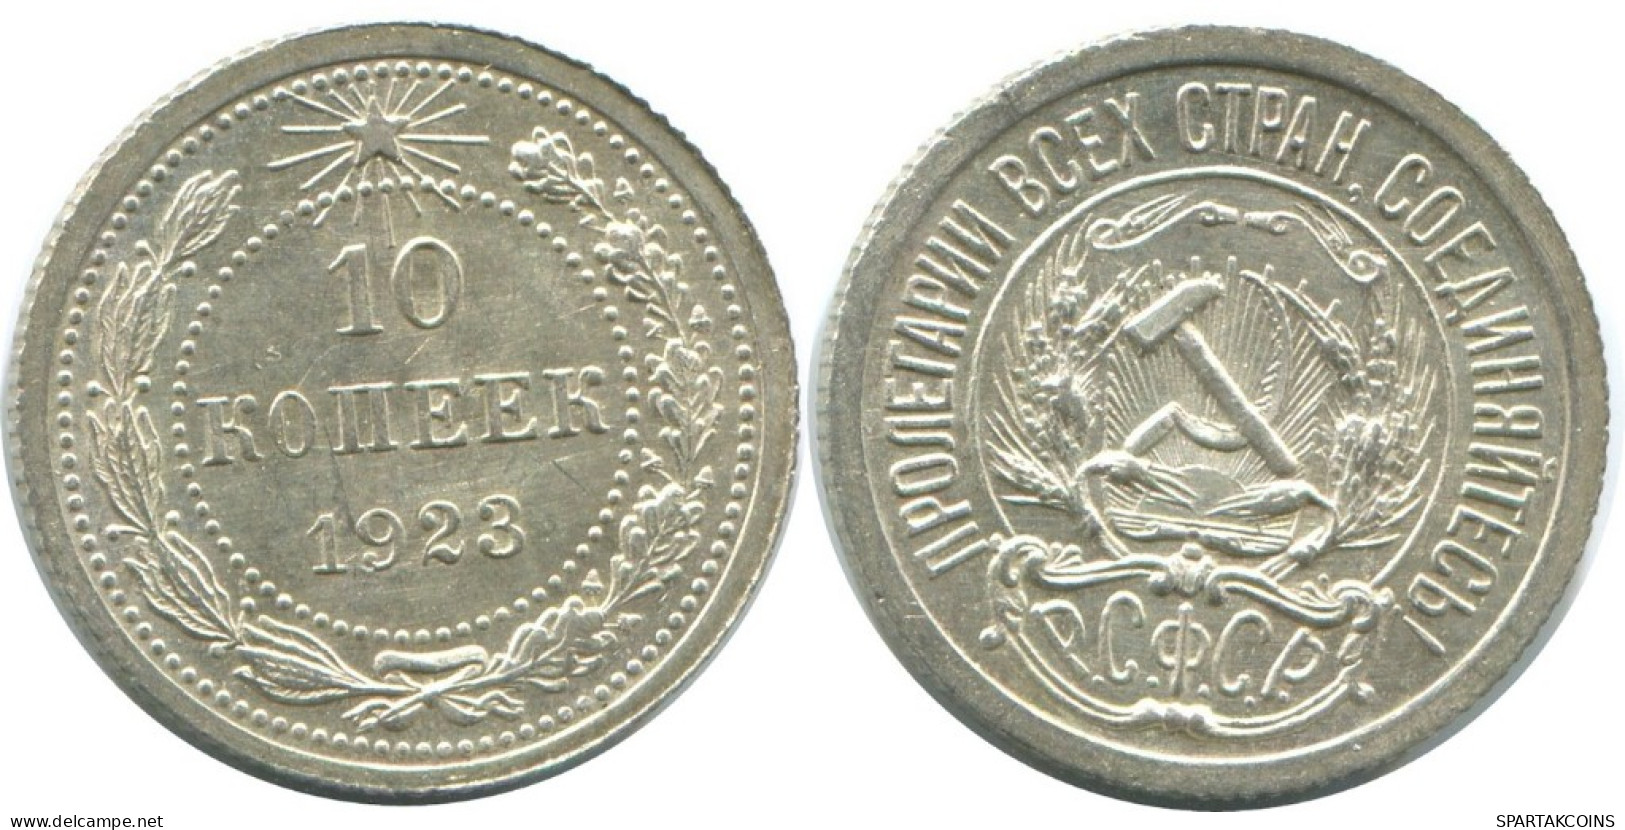 10 KOPEKS 1923 RUSSIA RSFSR SILVER Coin HIGH GRADE #AE987.4.U.A - Russia